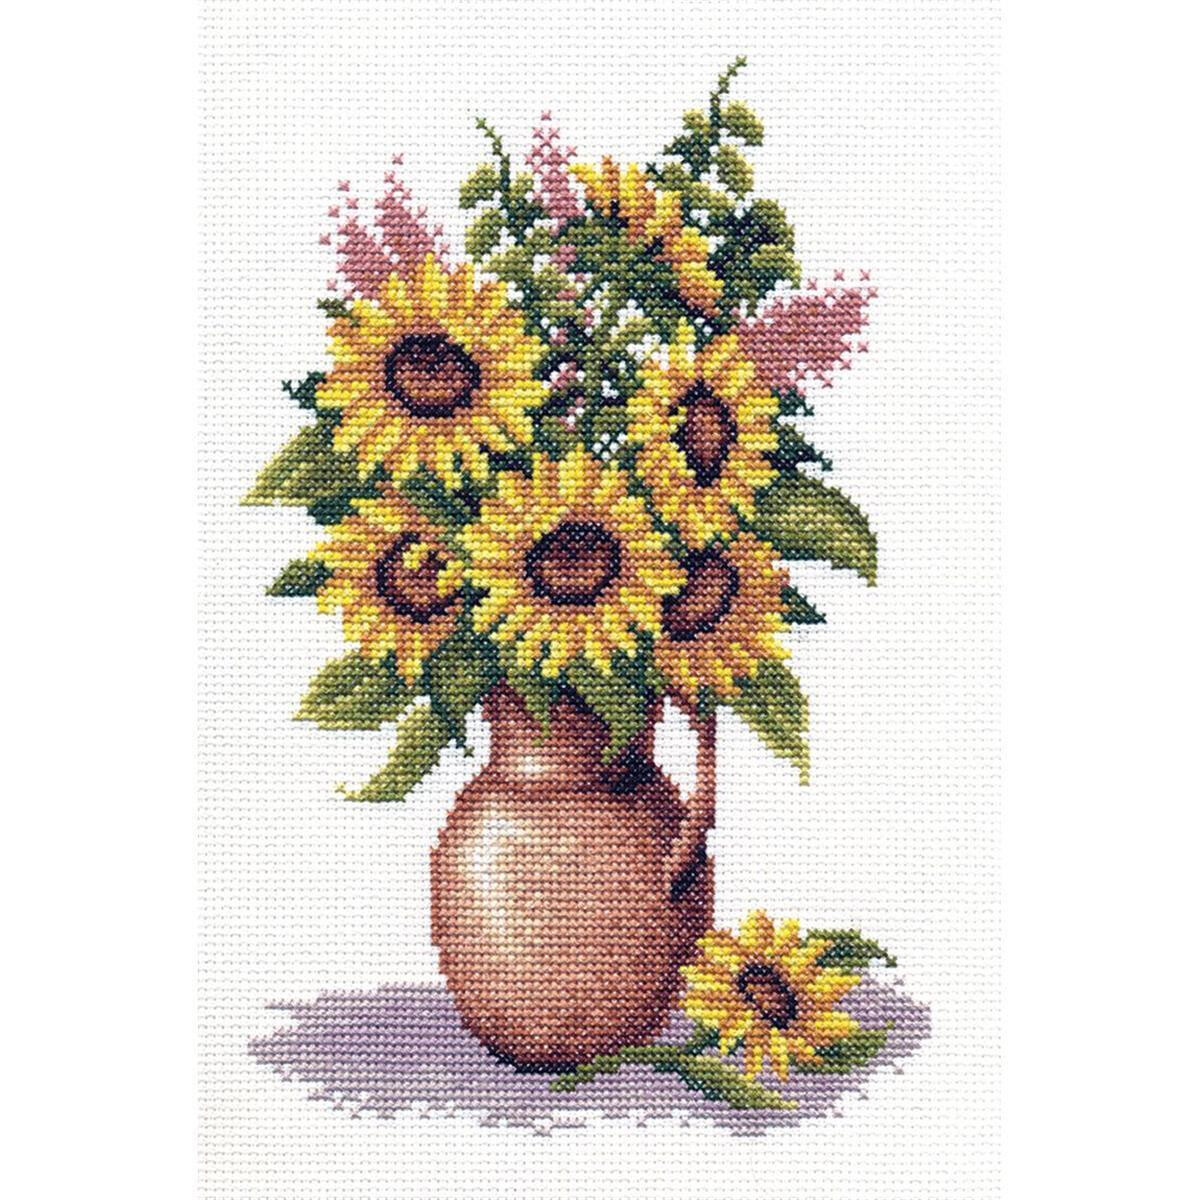 Panna counted cross stitch kit "Sunflower...